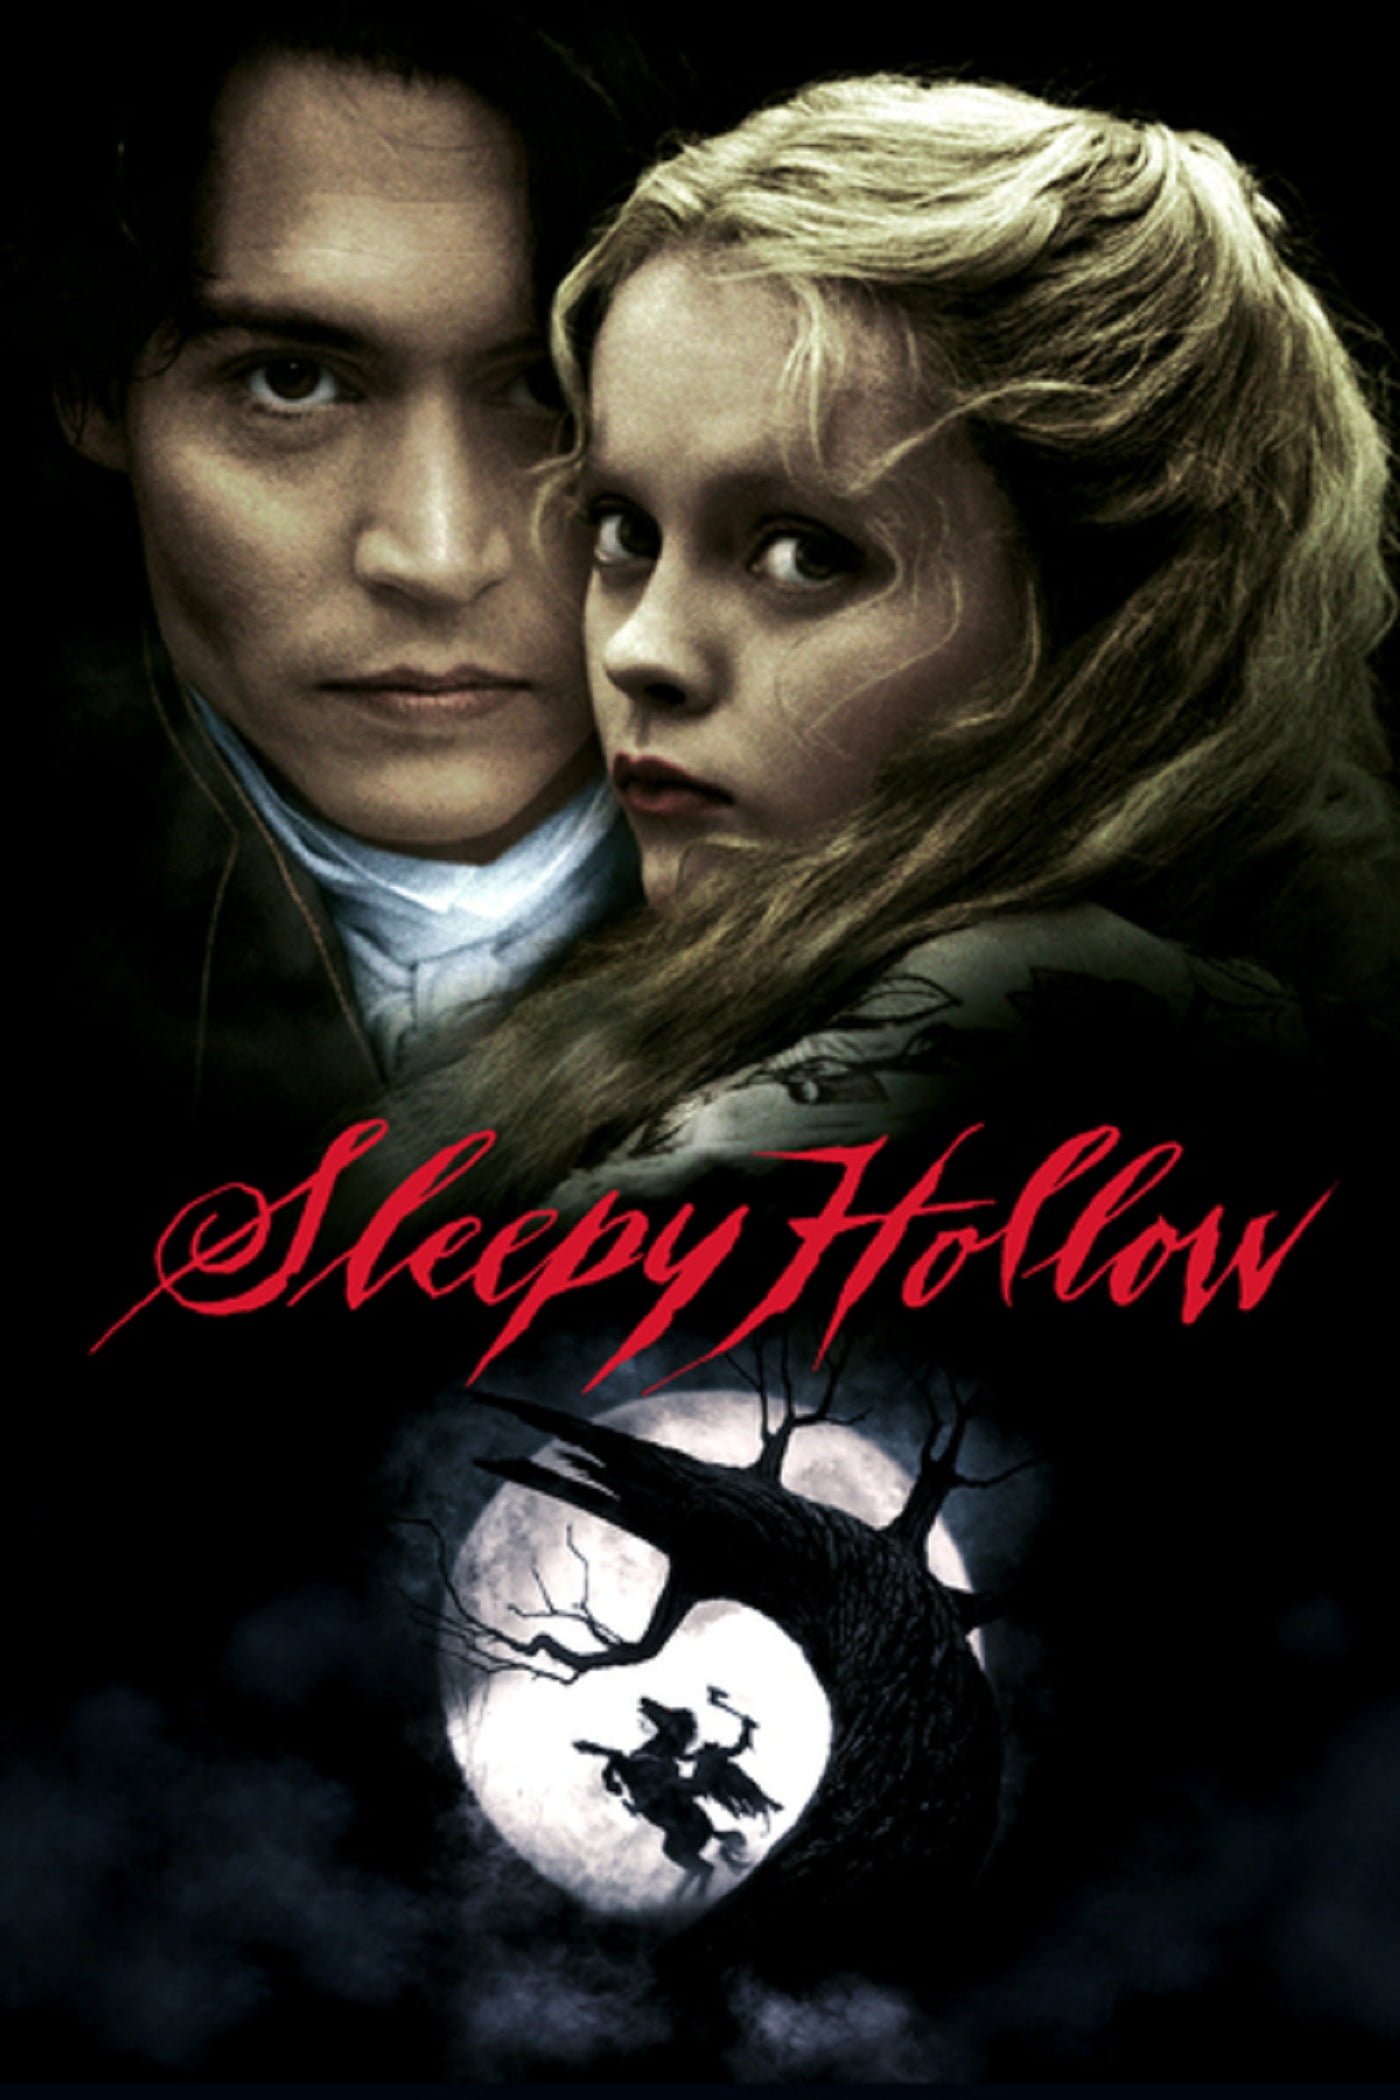 Quel oscar a reçu Tim Burton pour son film Sleepy Hollow sorti en 1999 ? 